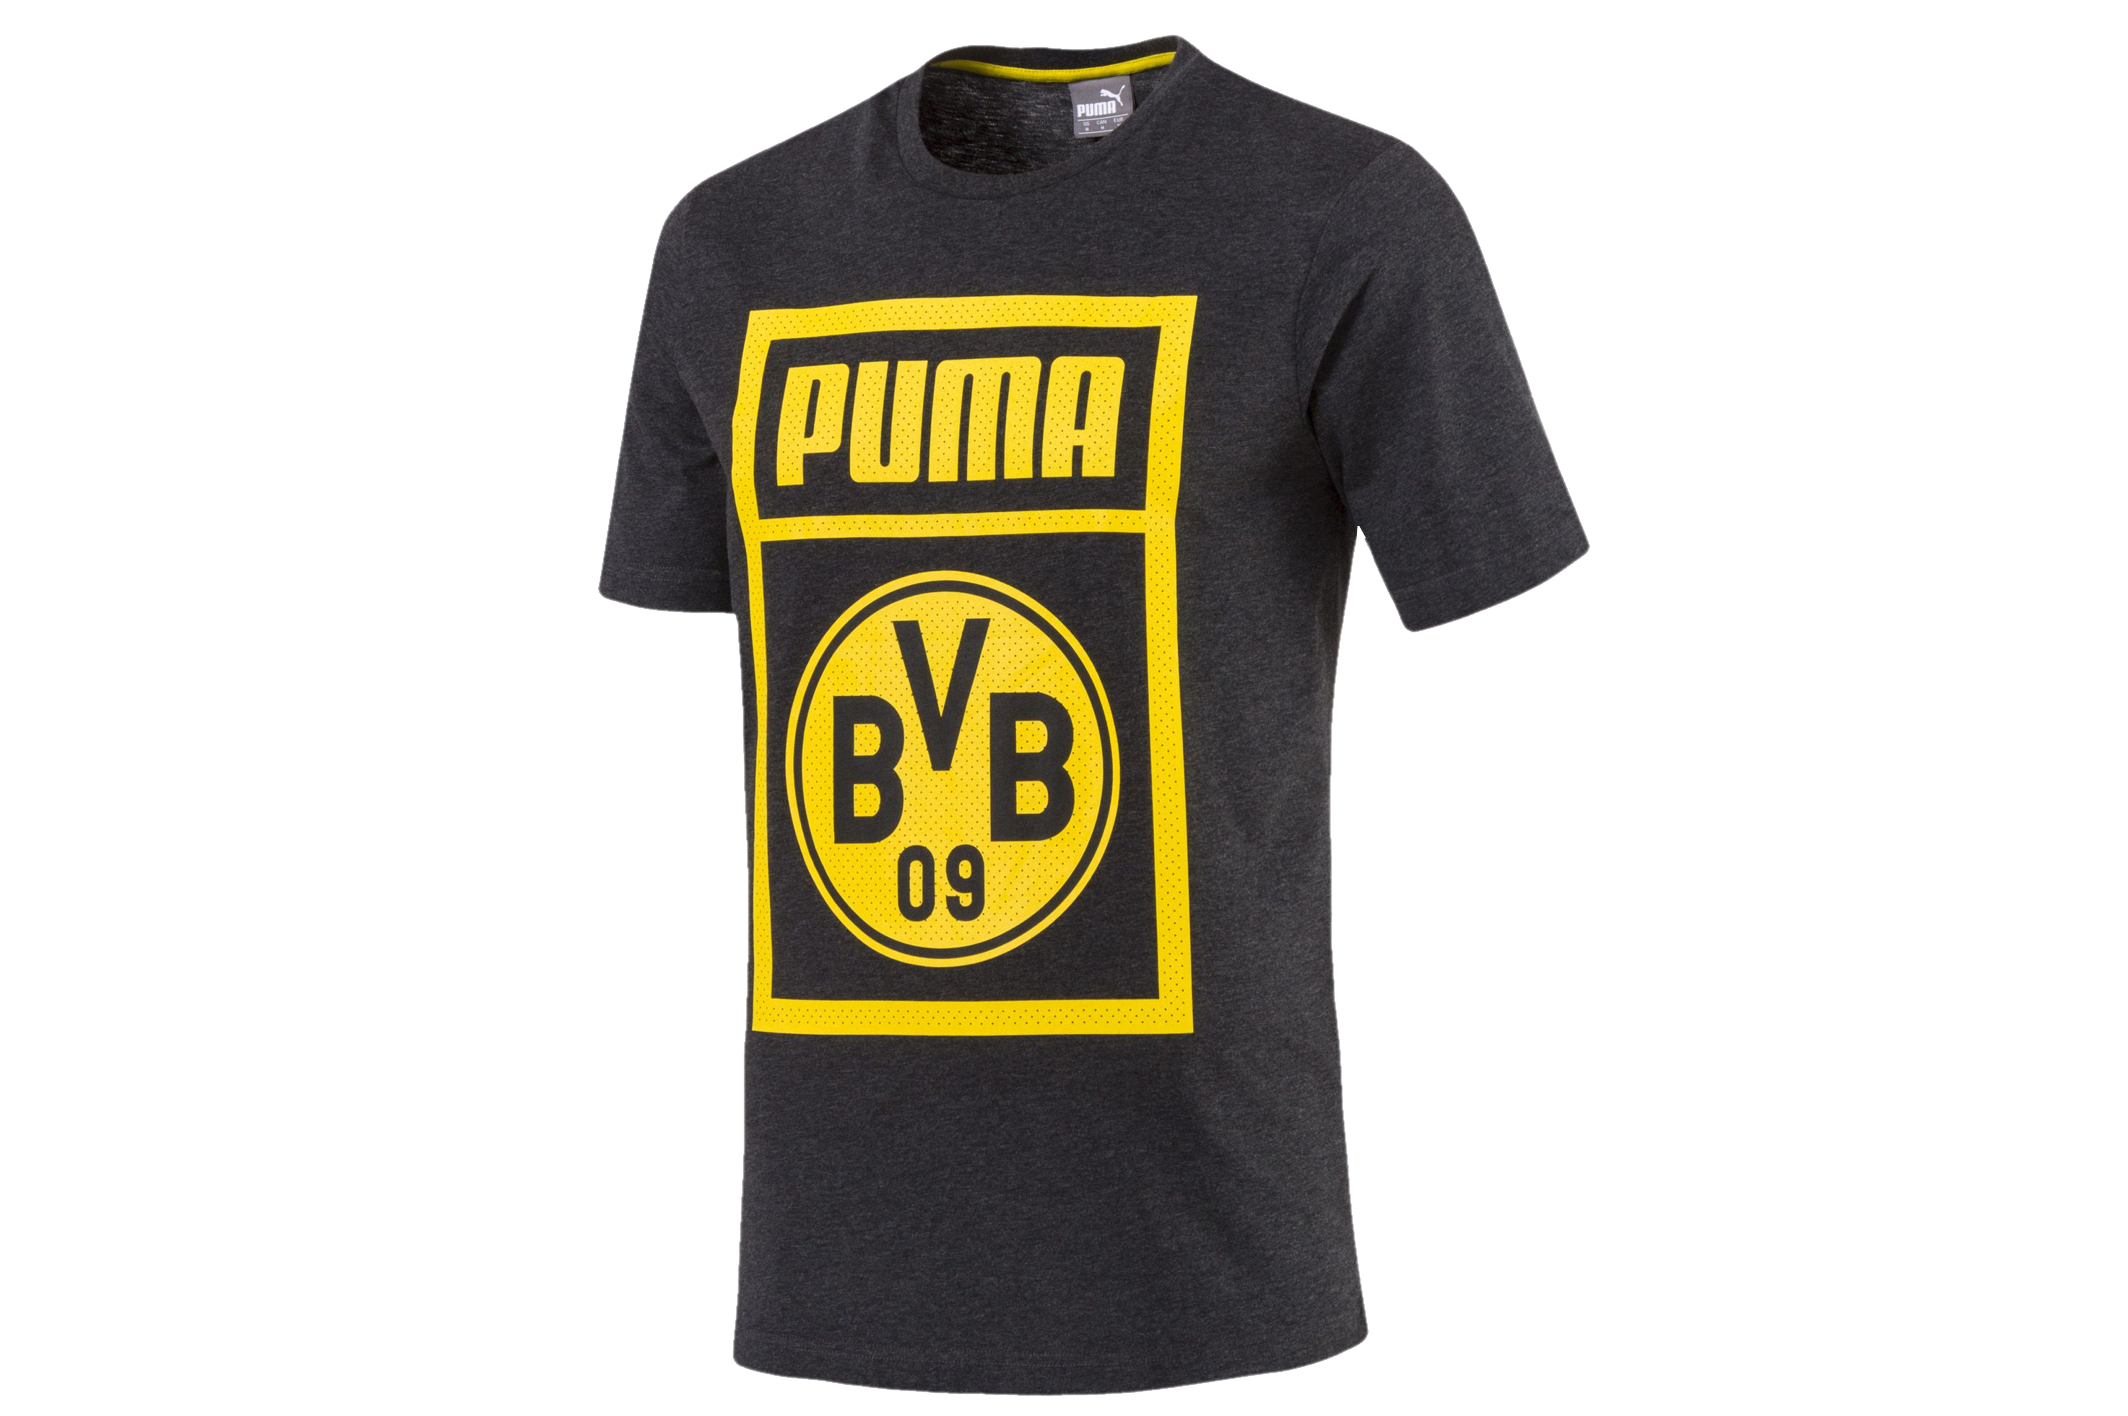 Bvb Png - Mobile Phone Accessories Borussia Dortmund ...